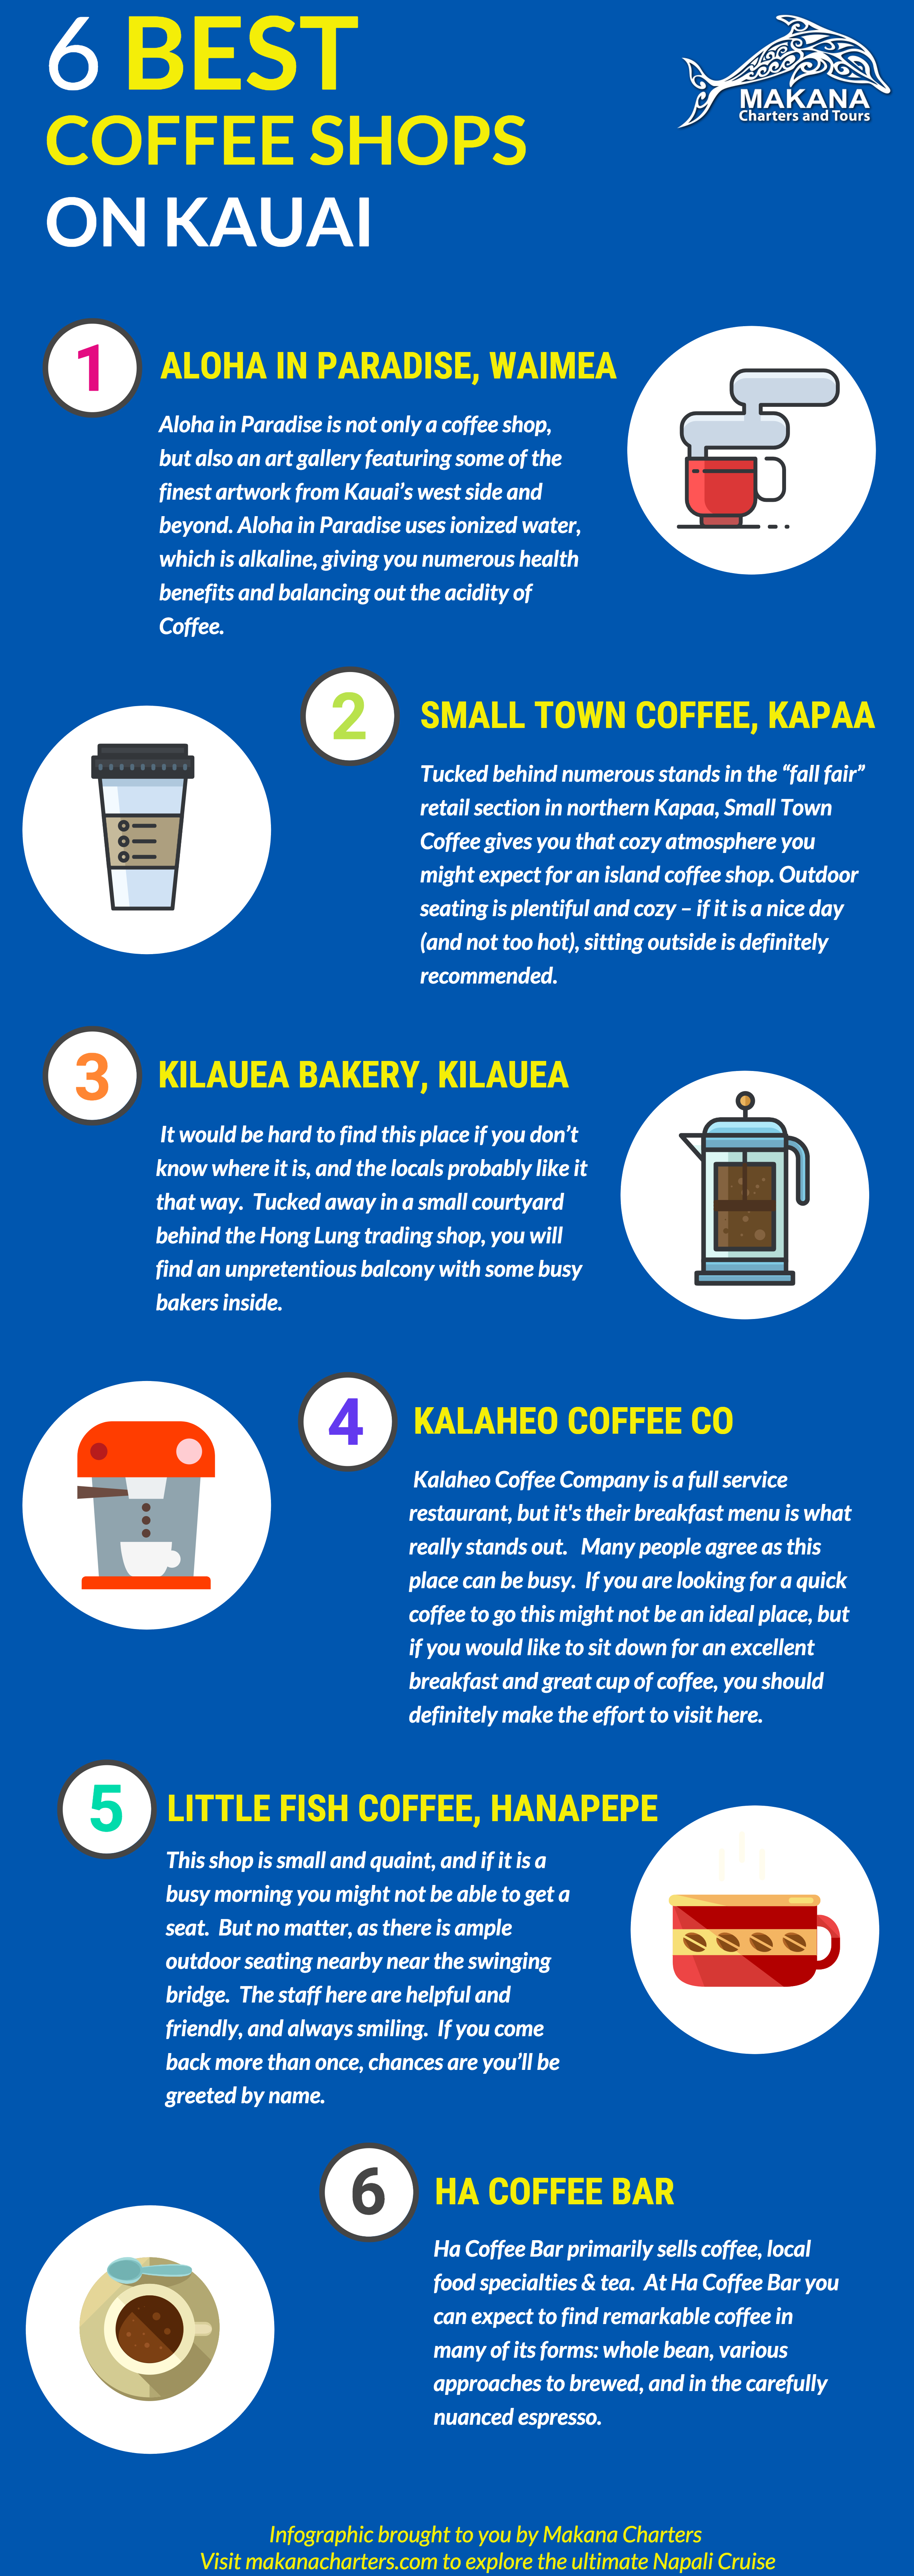 6 Best Coffee Shops on Kauai [Infographic]